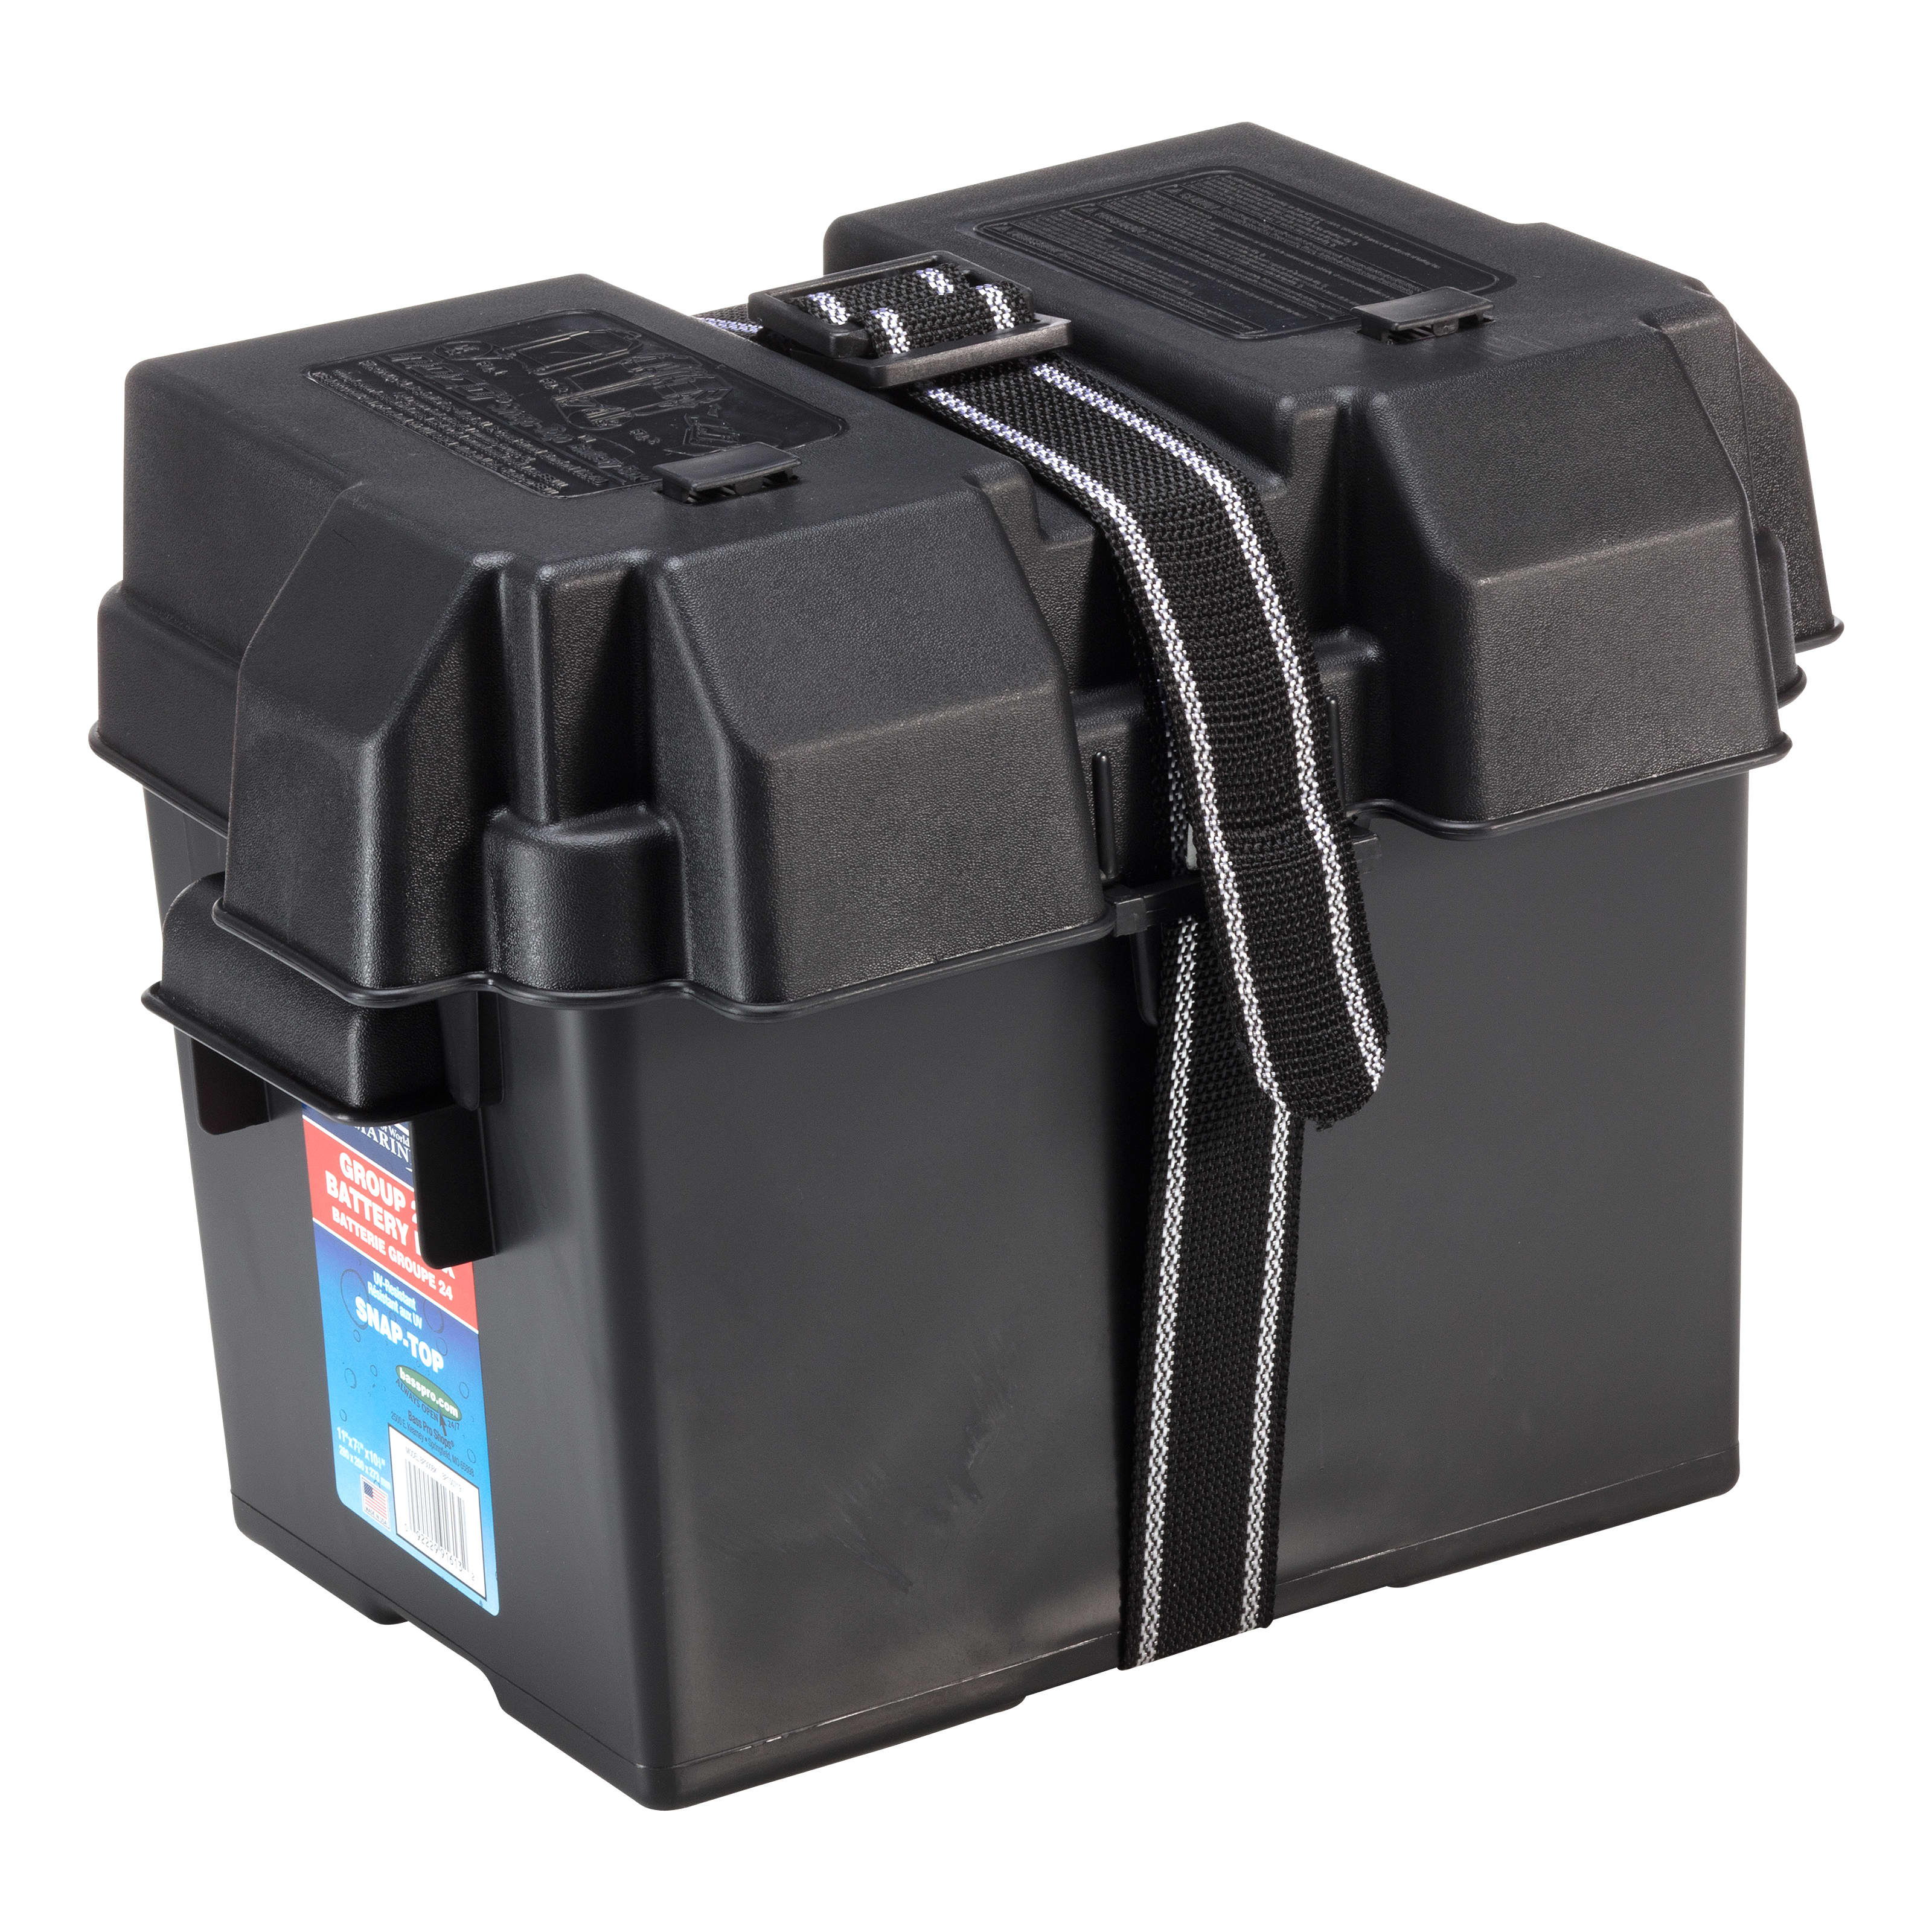 Bass Pro Shops® Snap-Top Marine Battery Box - 11" x 7.8" x 10.75"